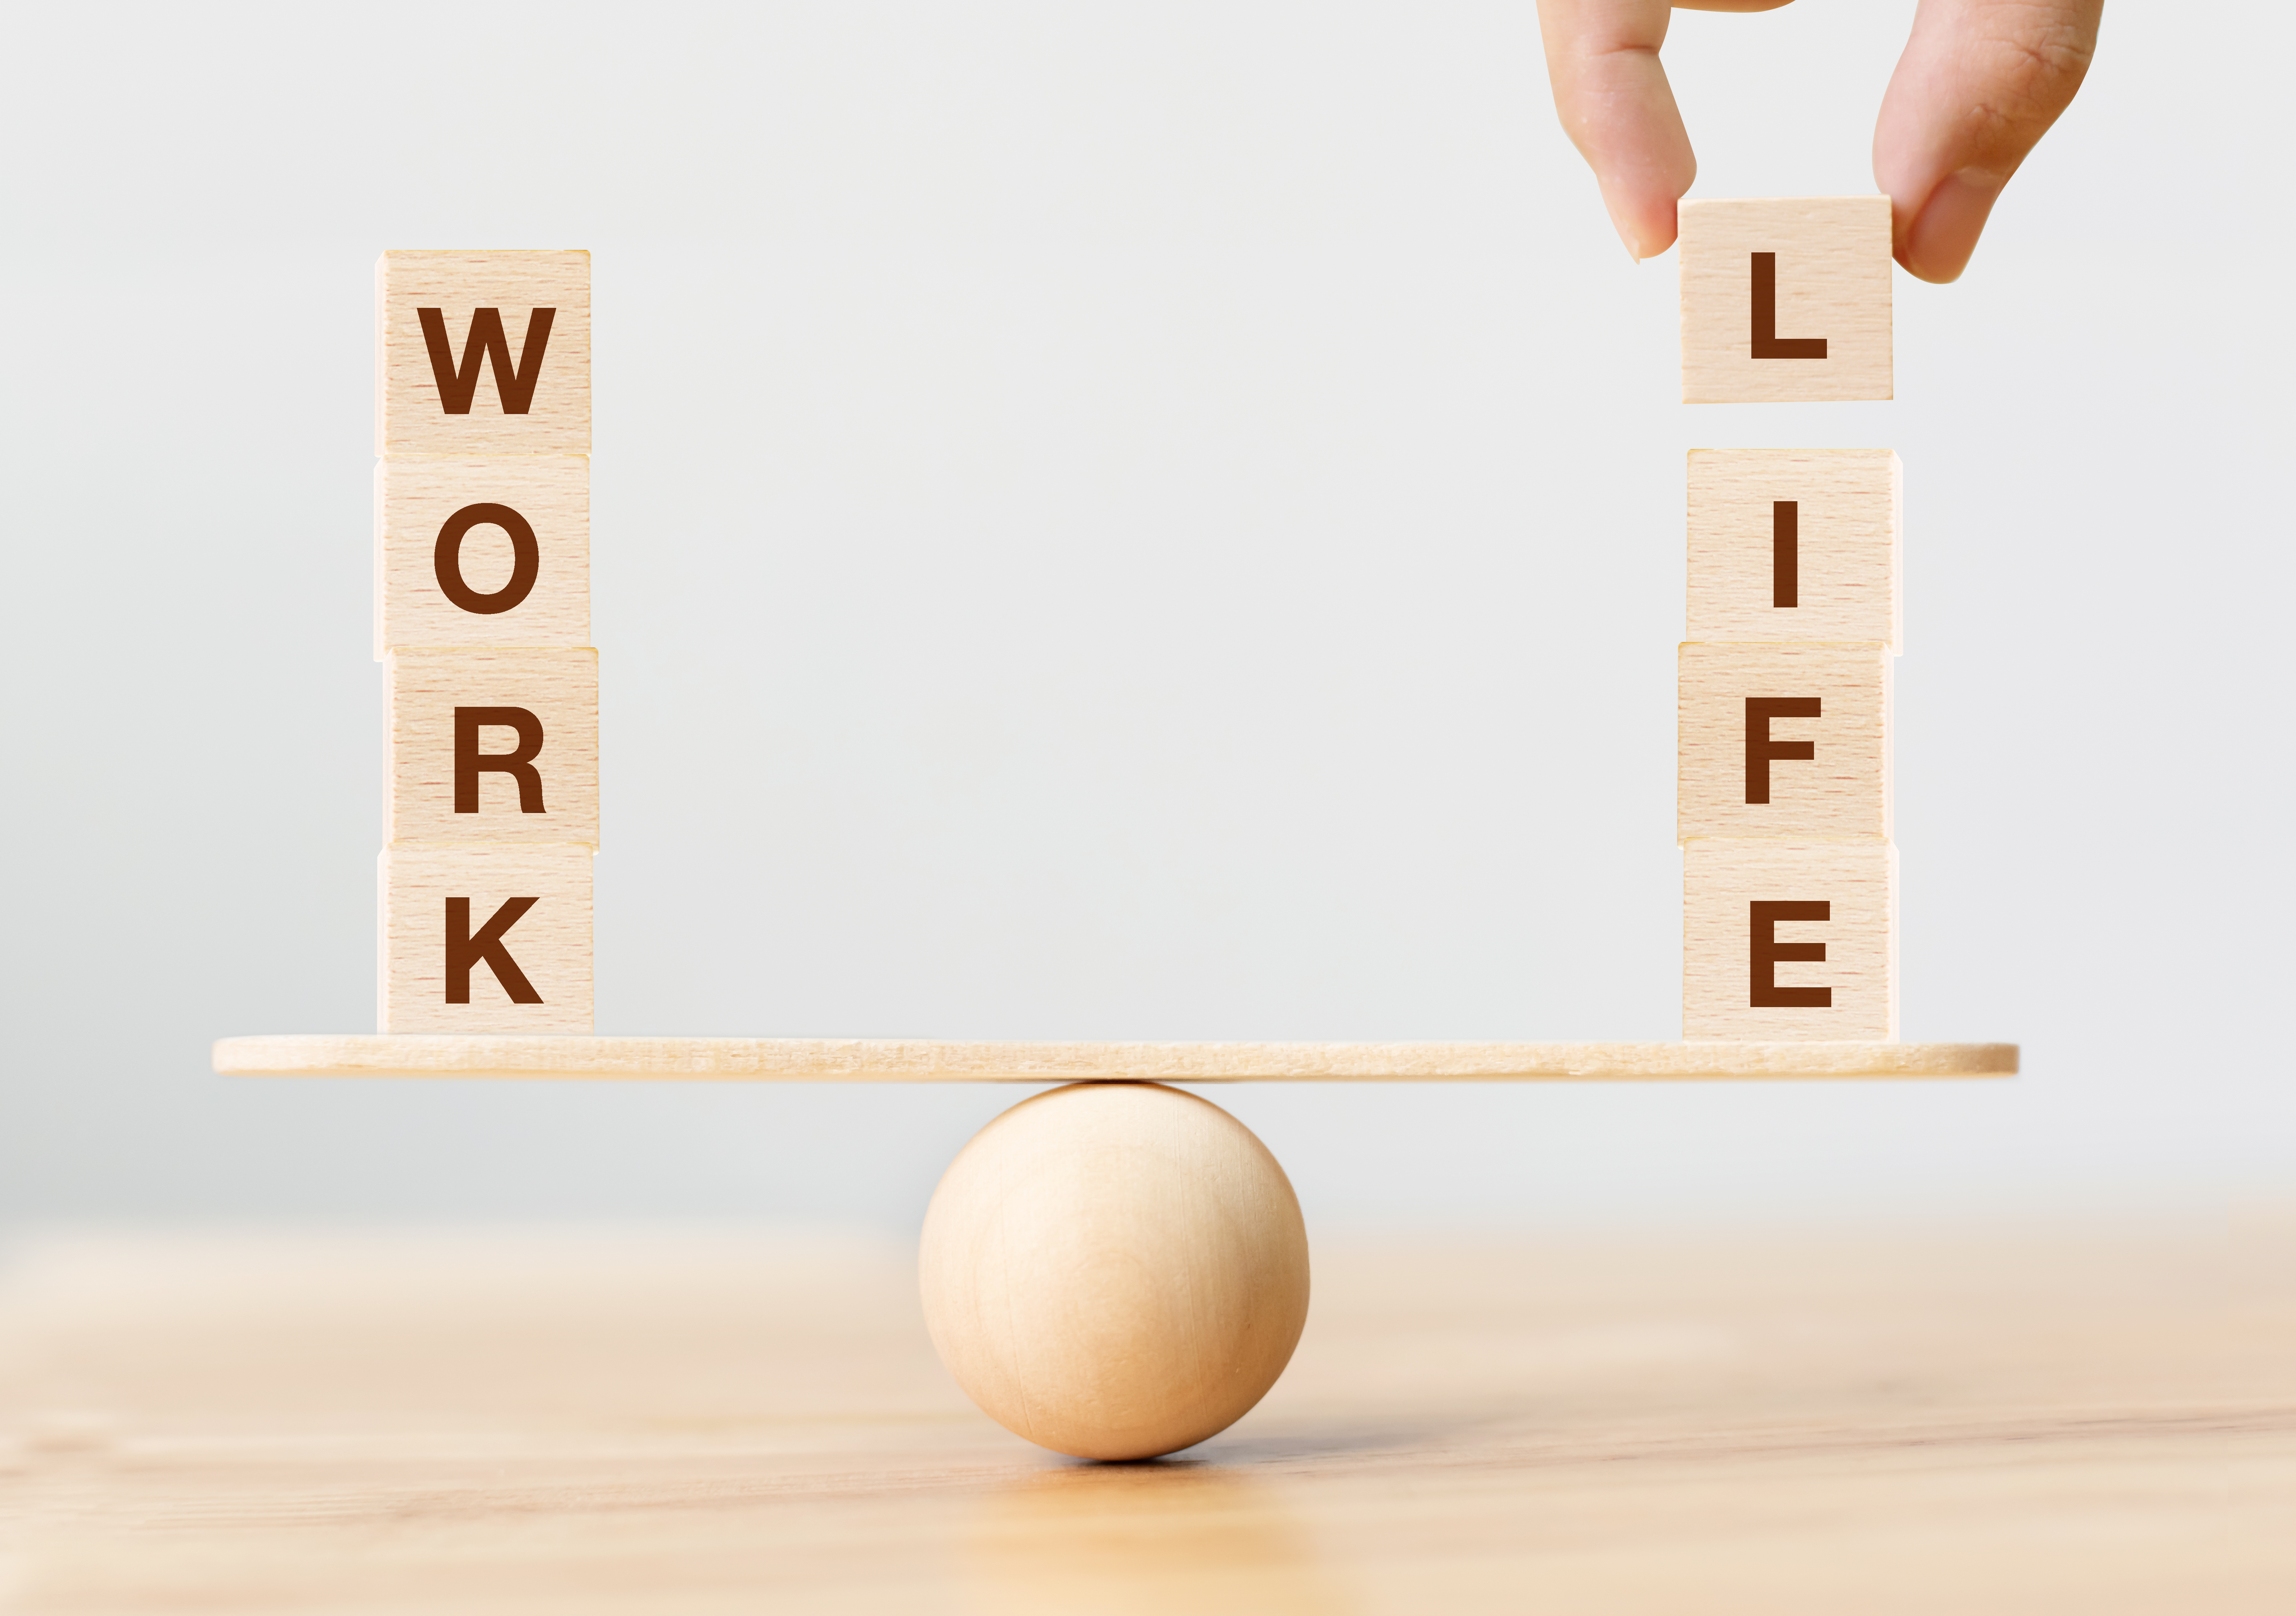 Life Work Balance 